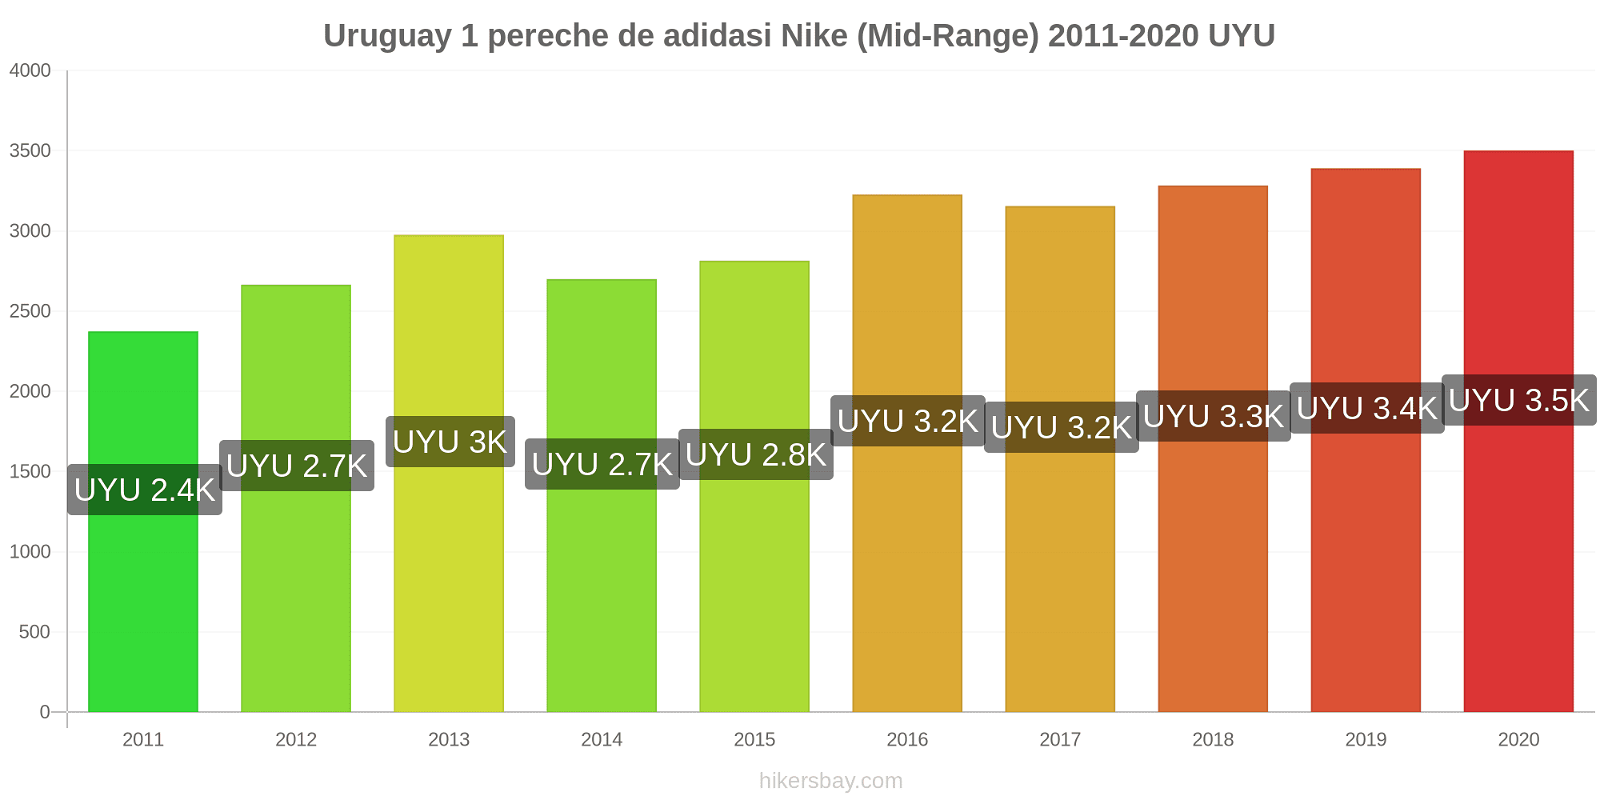 Uruguay modificări de preț 1 pereche de adidasi Nike (Mid-Range) hikersbay.com